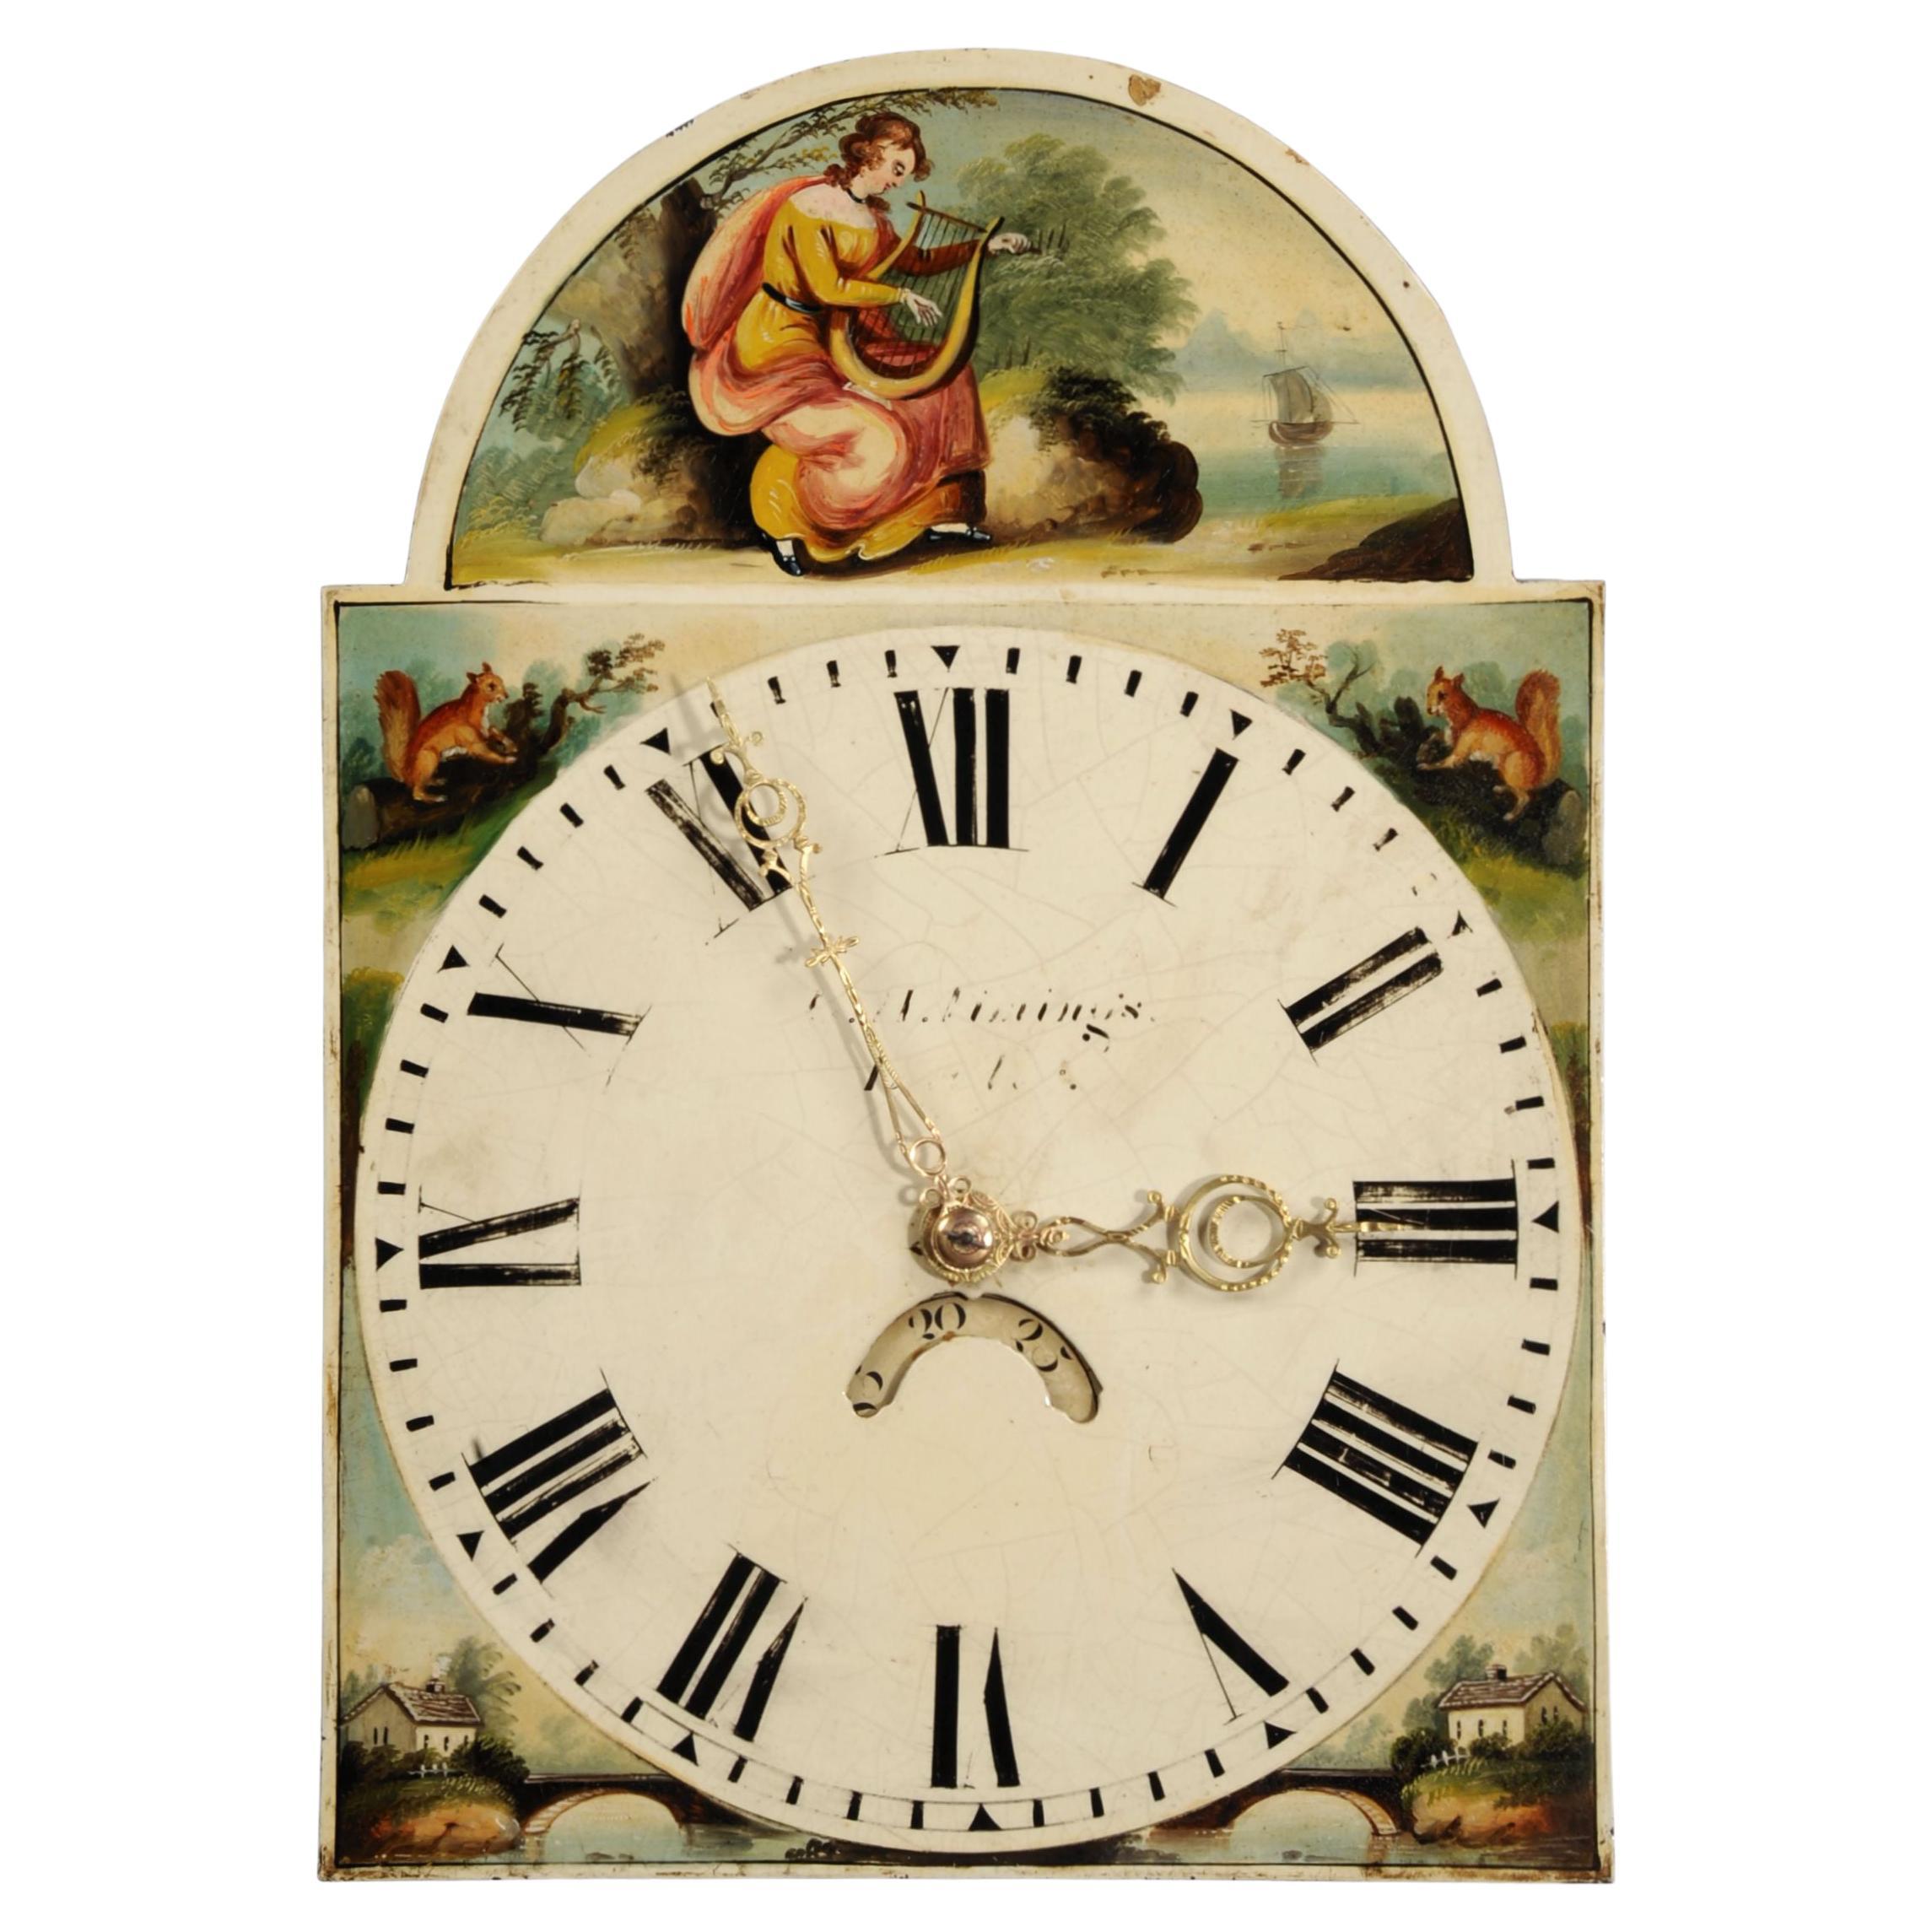 Details about   Nautical Wall Clock Antique Style Ship Decor Vintage Clocks Roman Numeral Clocks 